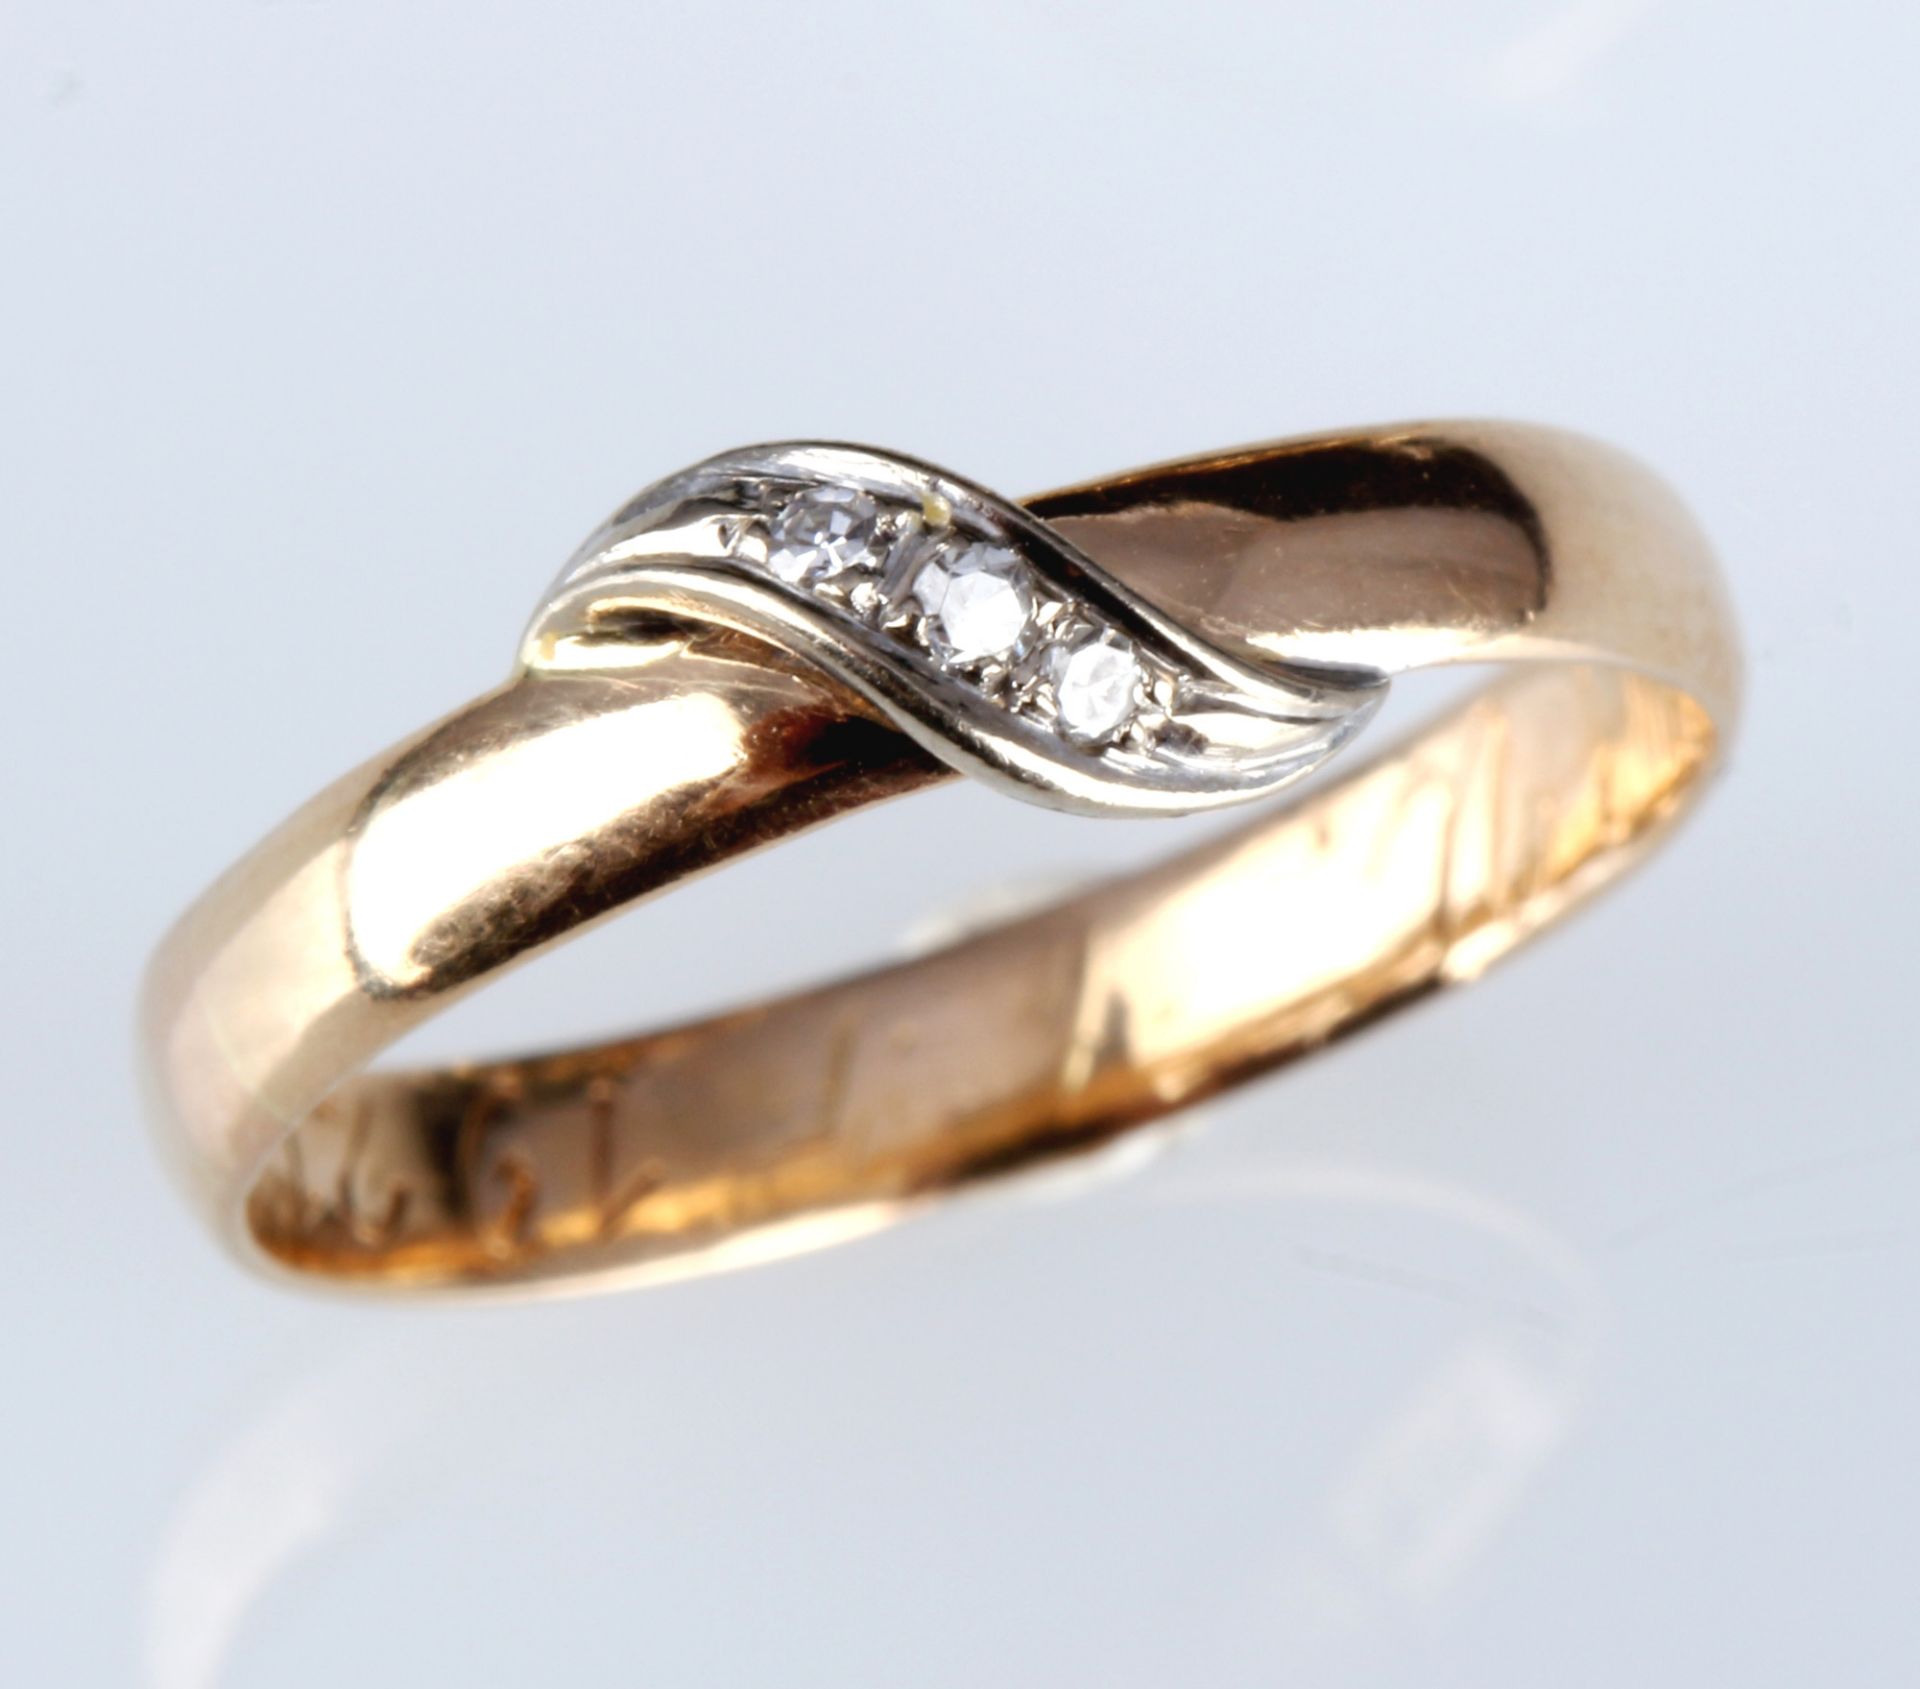 585 gold 3 rings with diamonds and rubins, 14K Gold Ringe mit Diamanten und Rubinen, - Image 3 of 6